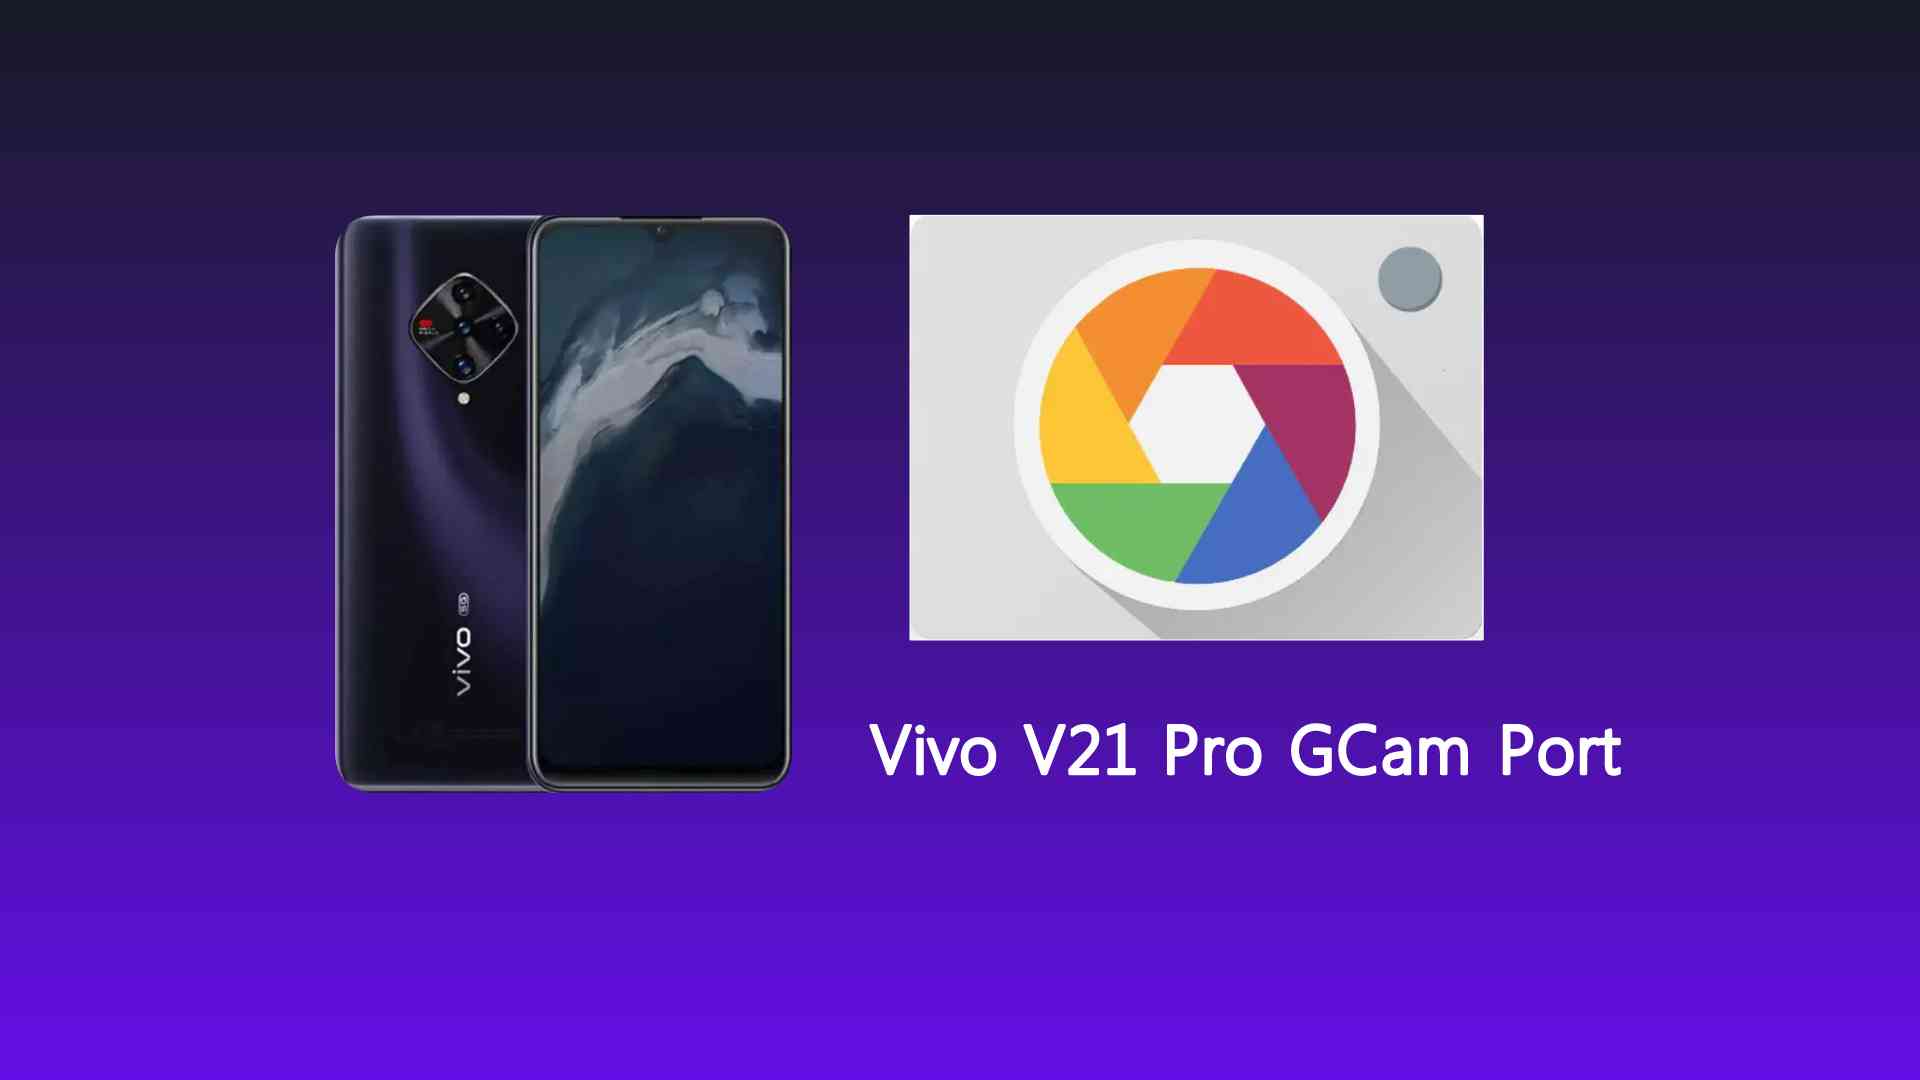 Vivo V21 Pro GCam Port